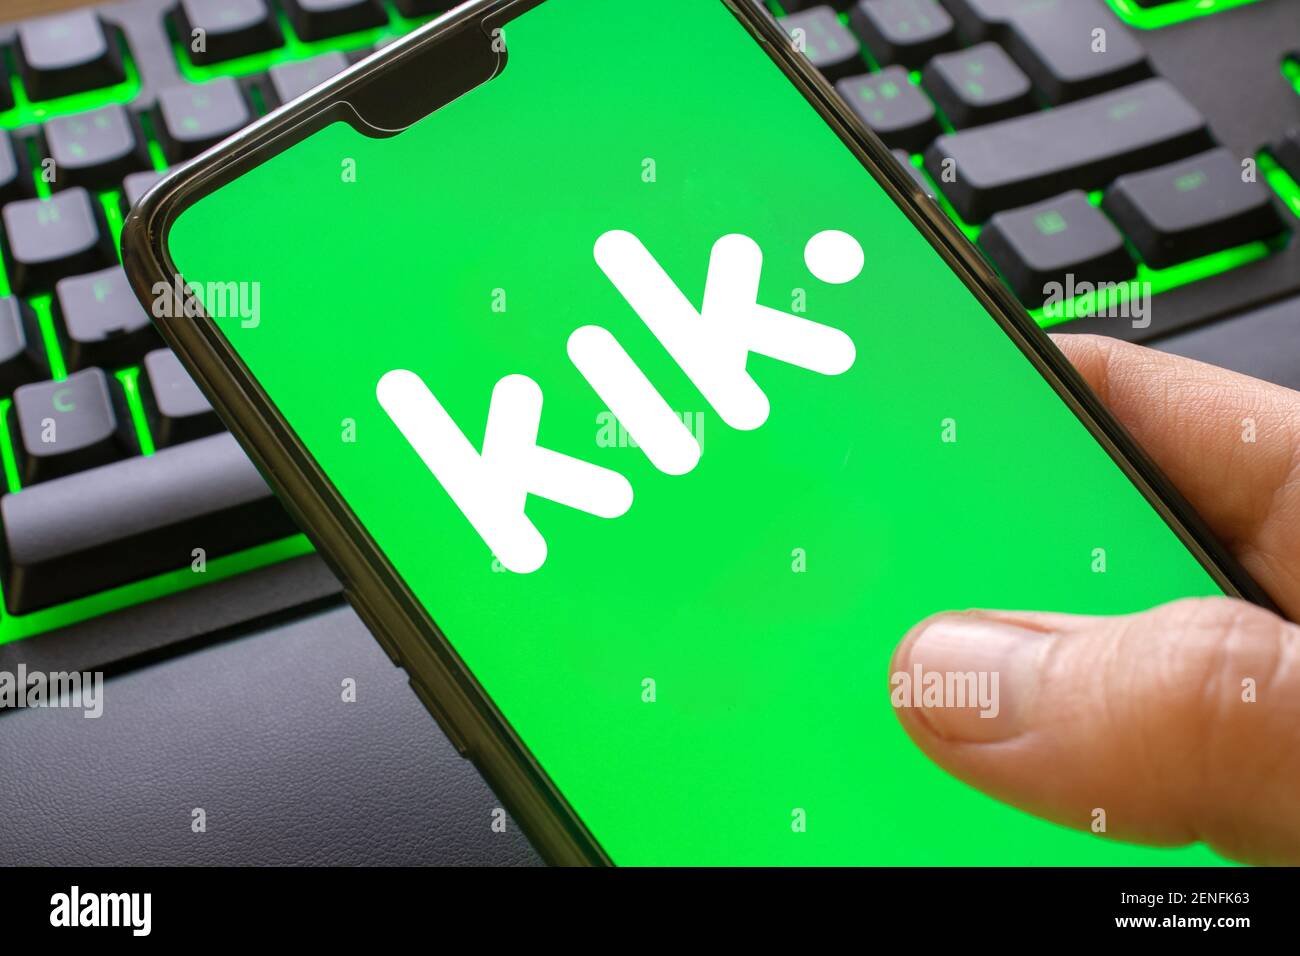 kik logo on the green screen of a smartphone. Messaging app on phone.  Italy, Verona, 17-02-21 Stock Photo - Alamy